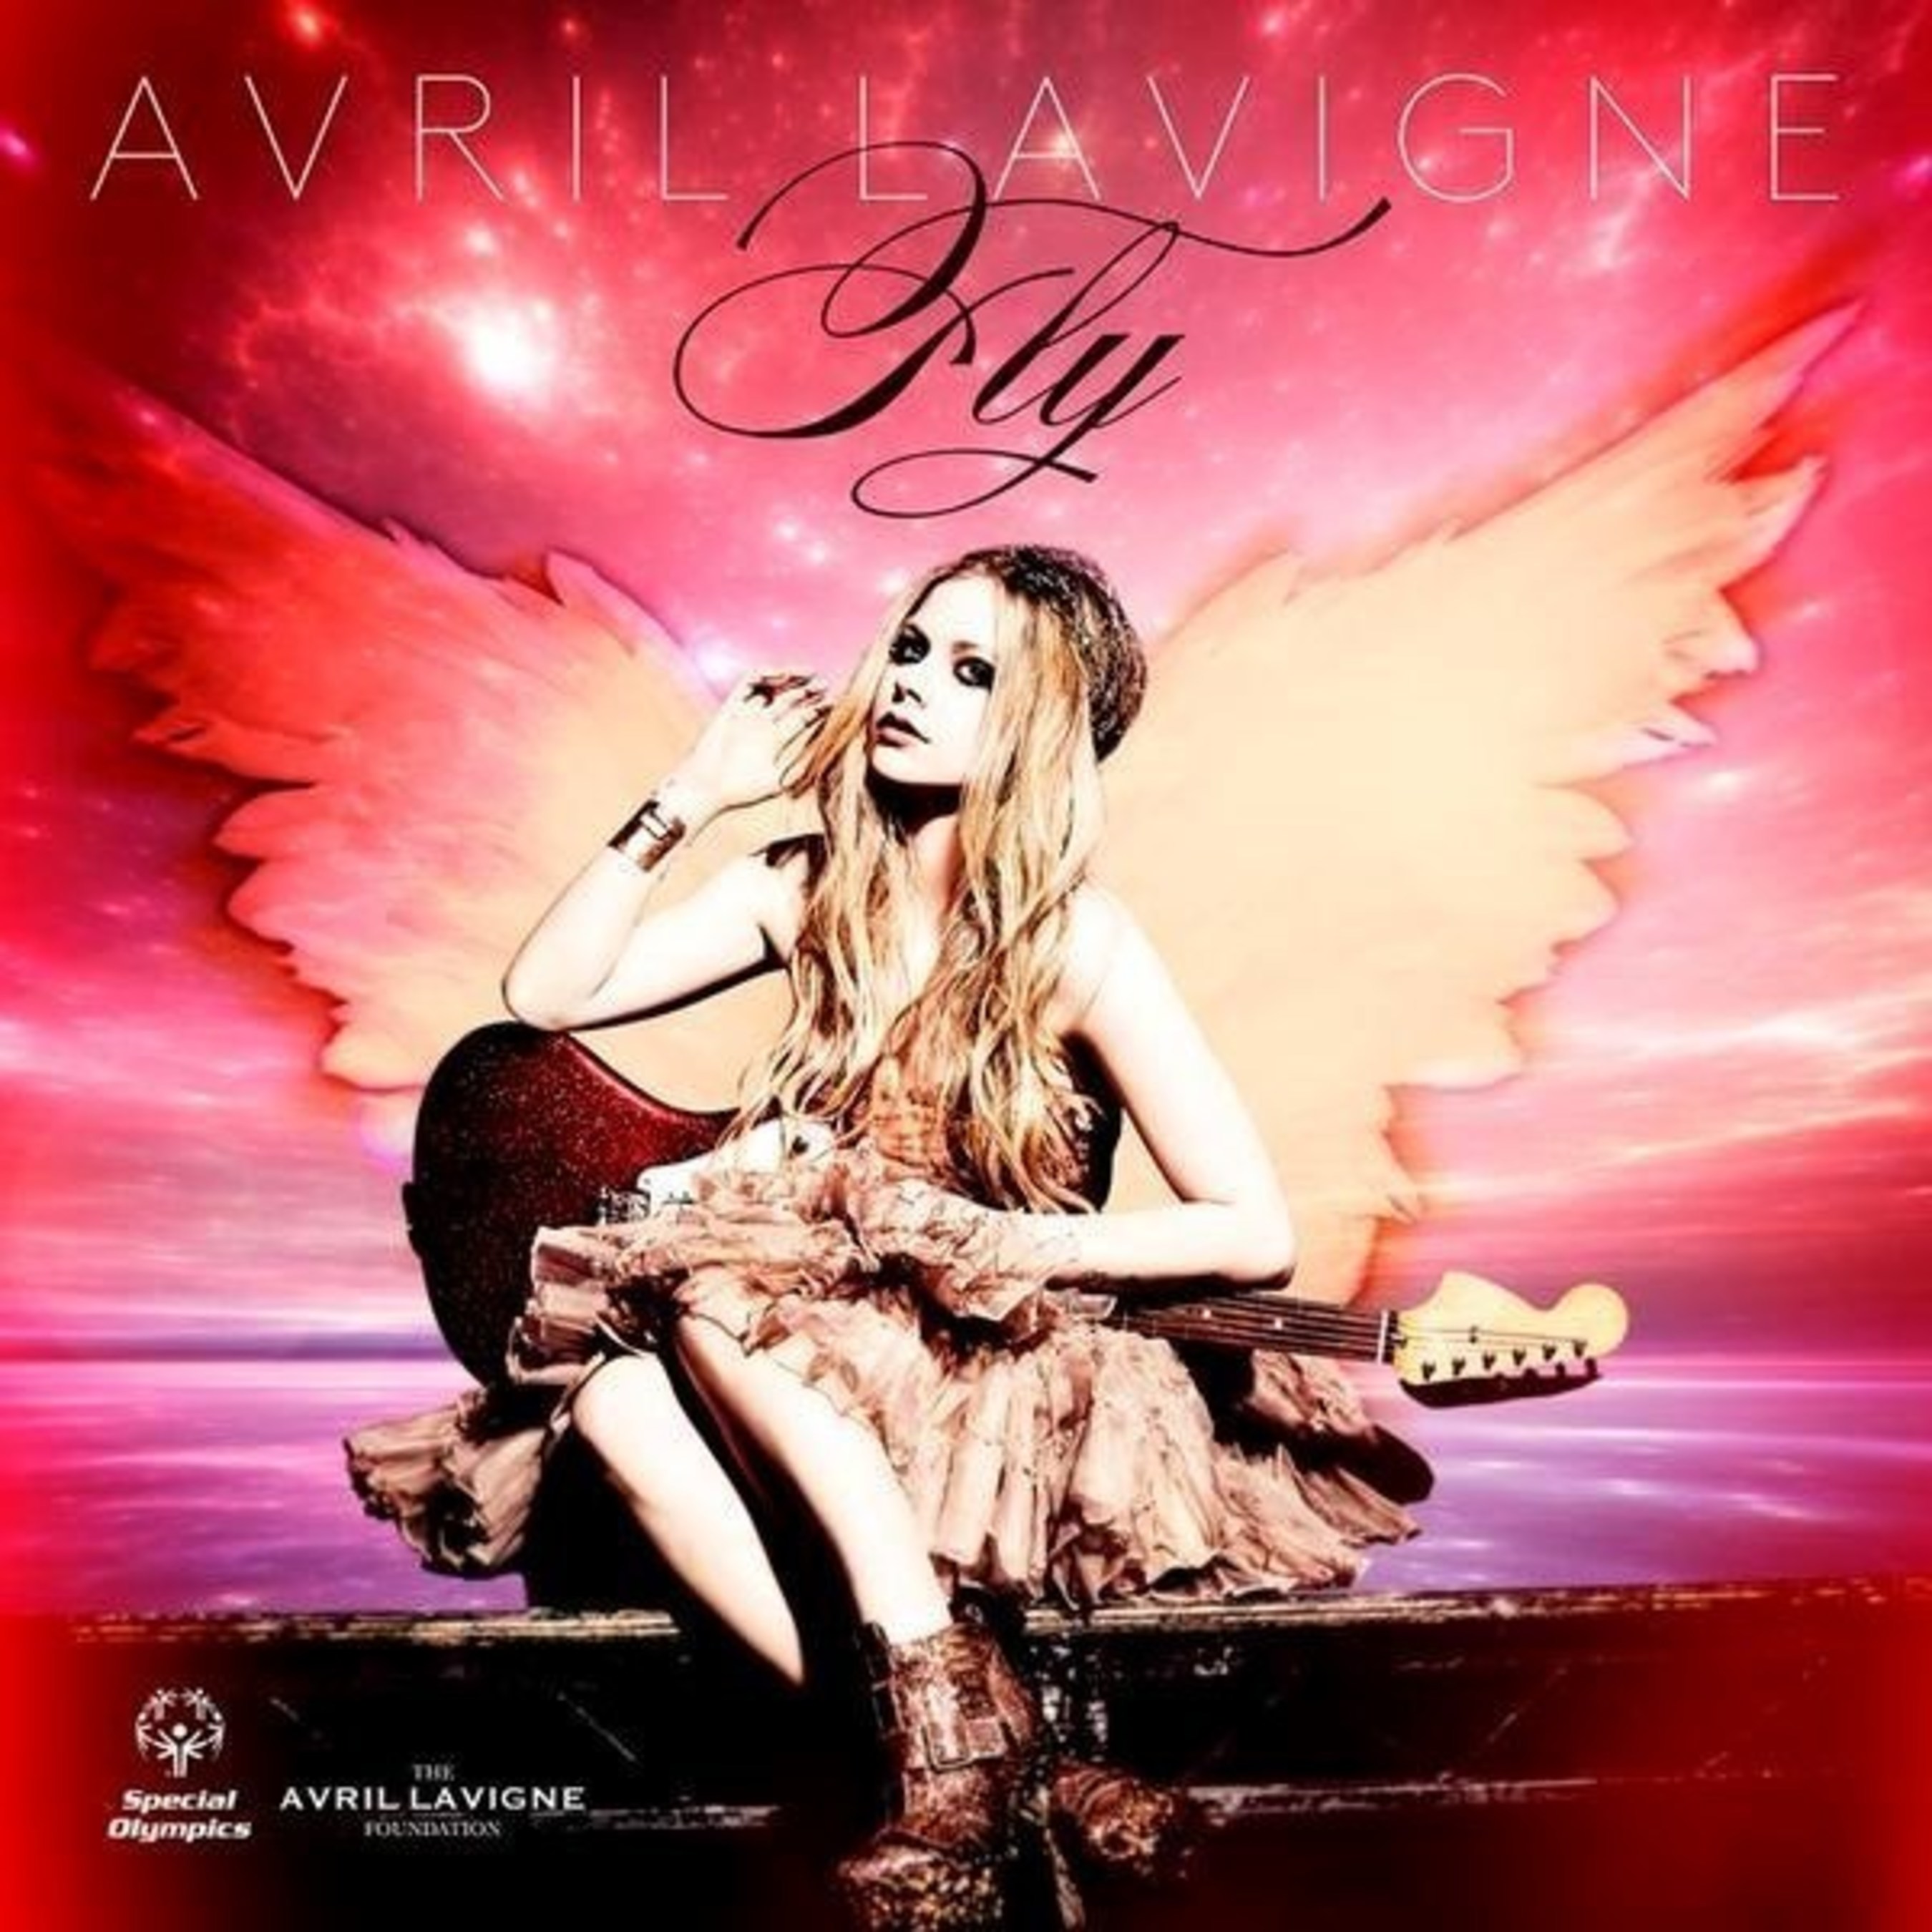 Avril Lavigne cover art for "Fly" photo by Mark Liddell